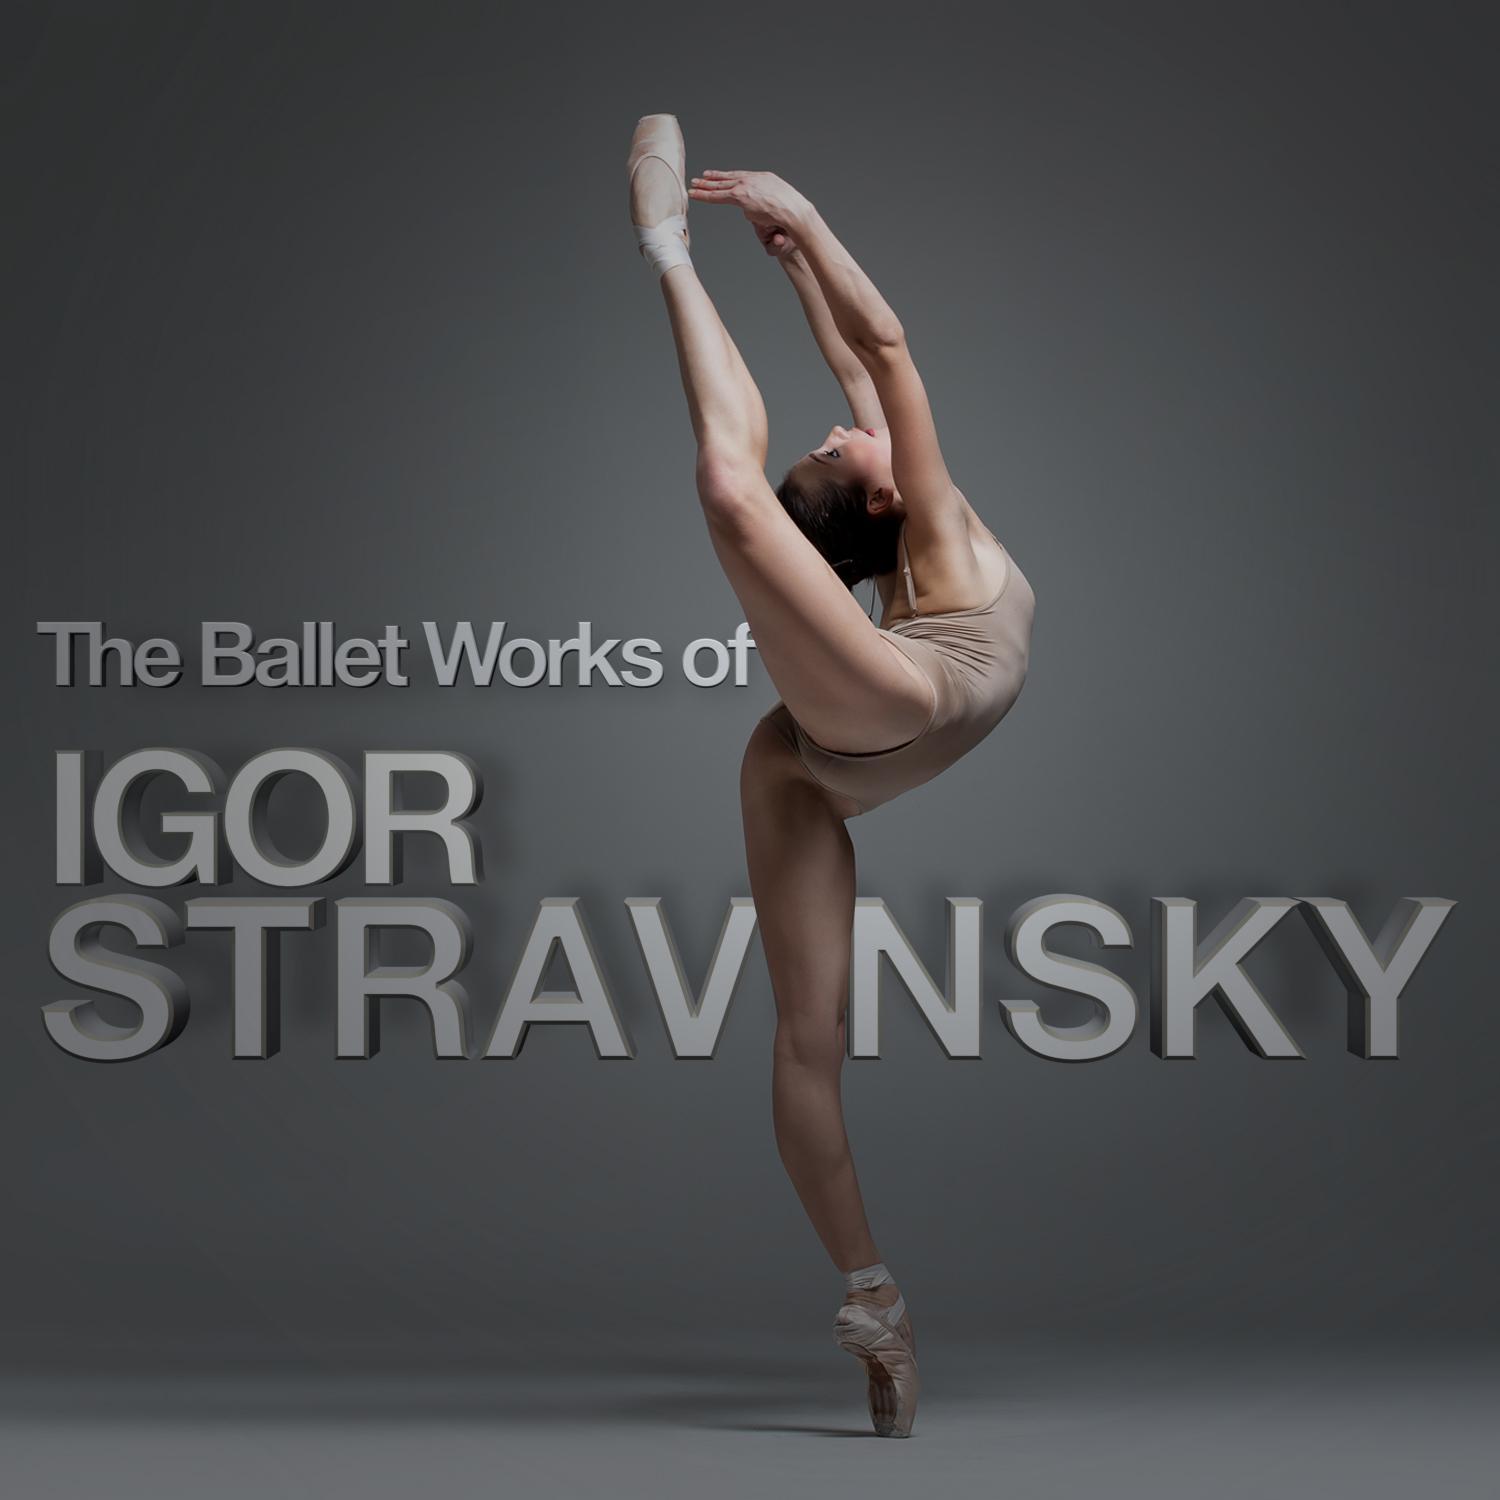 The Ballet Works of Igor Stravinsky